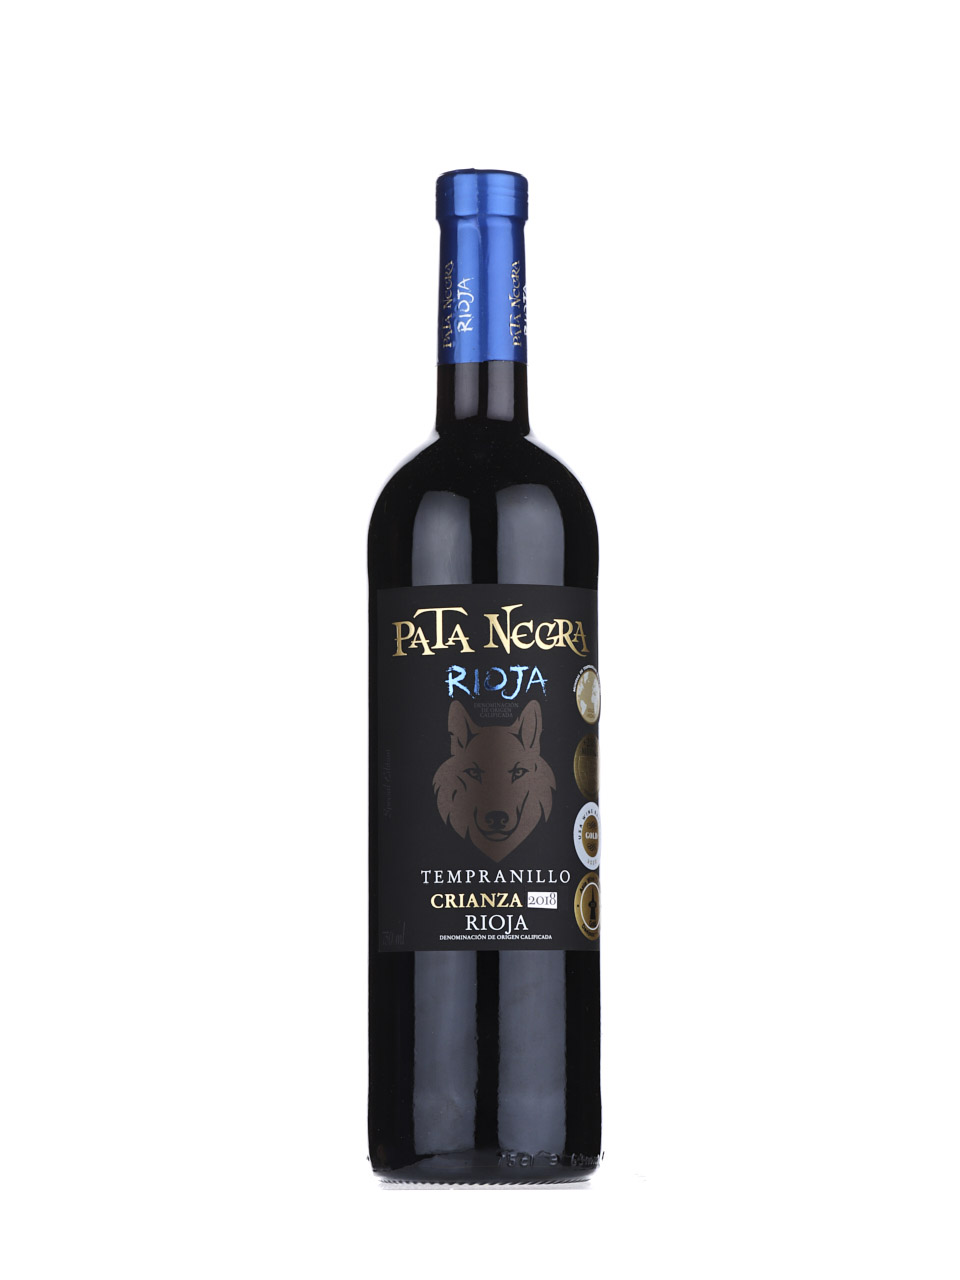 Comprar Pata Negra Rioja Tempranillo Crianza 2018